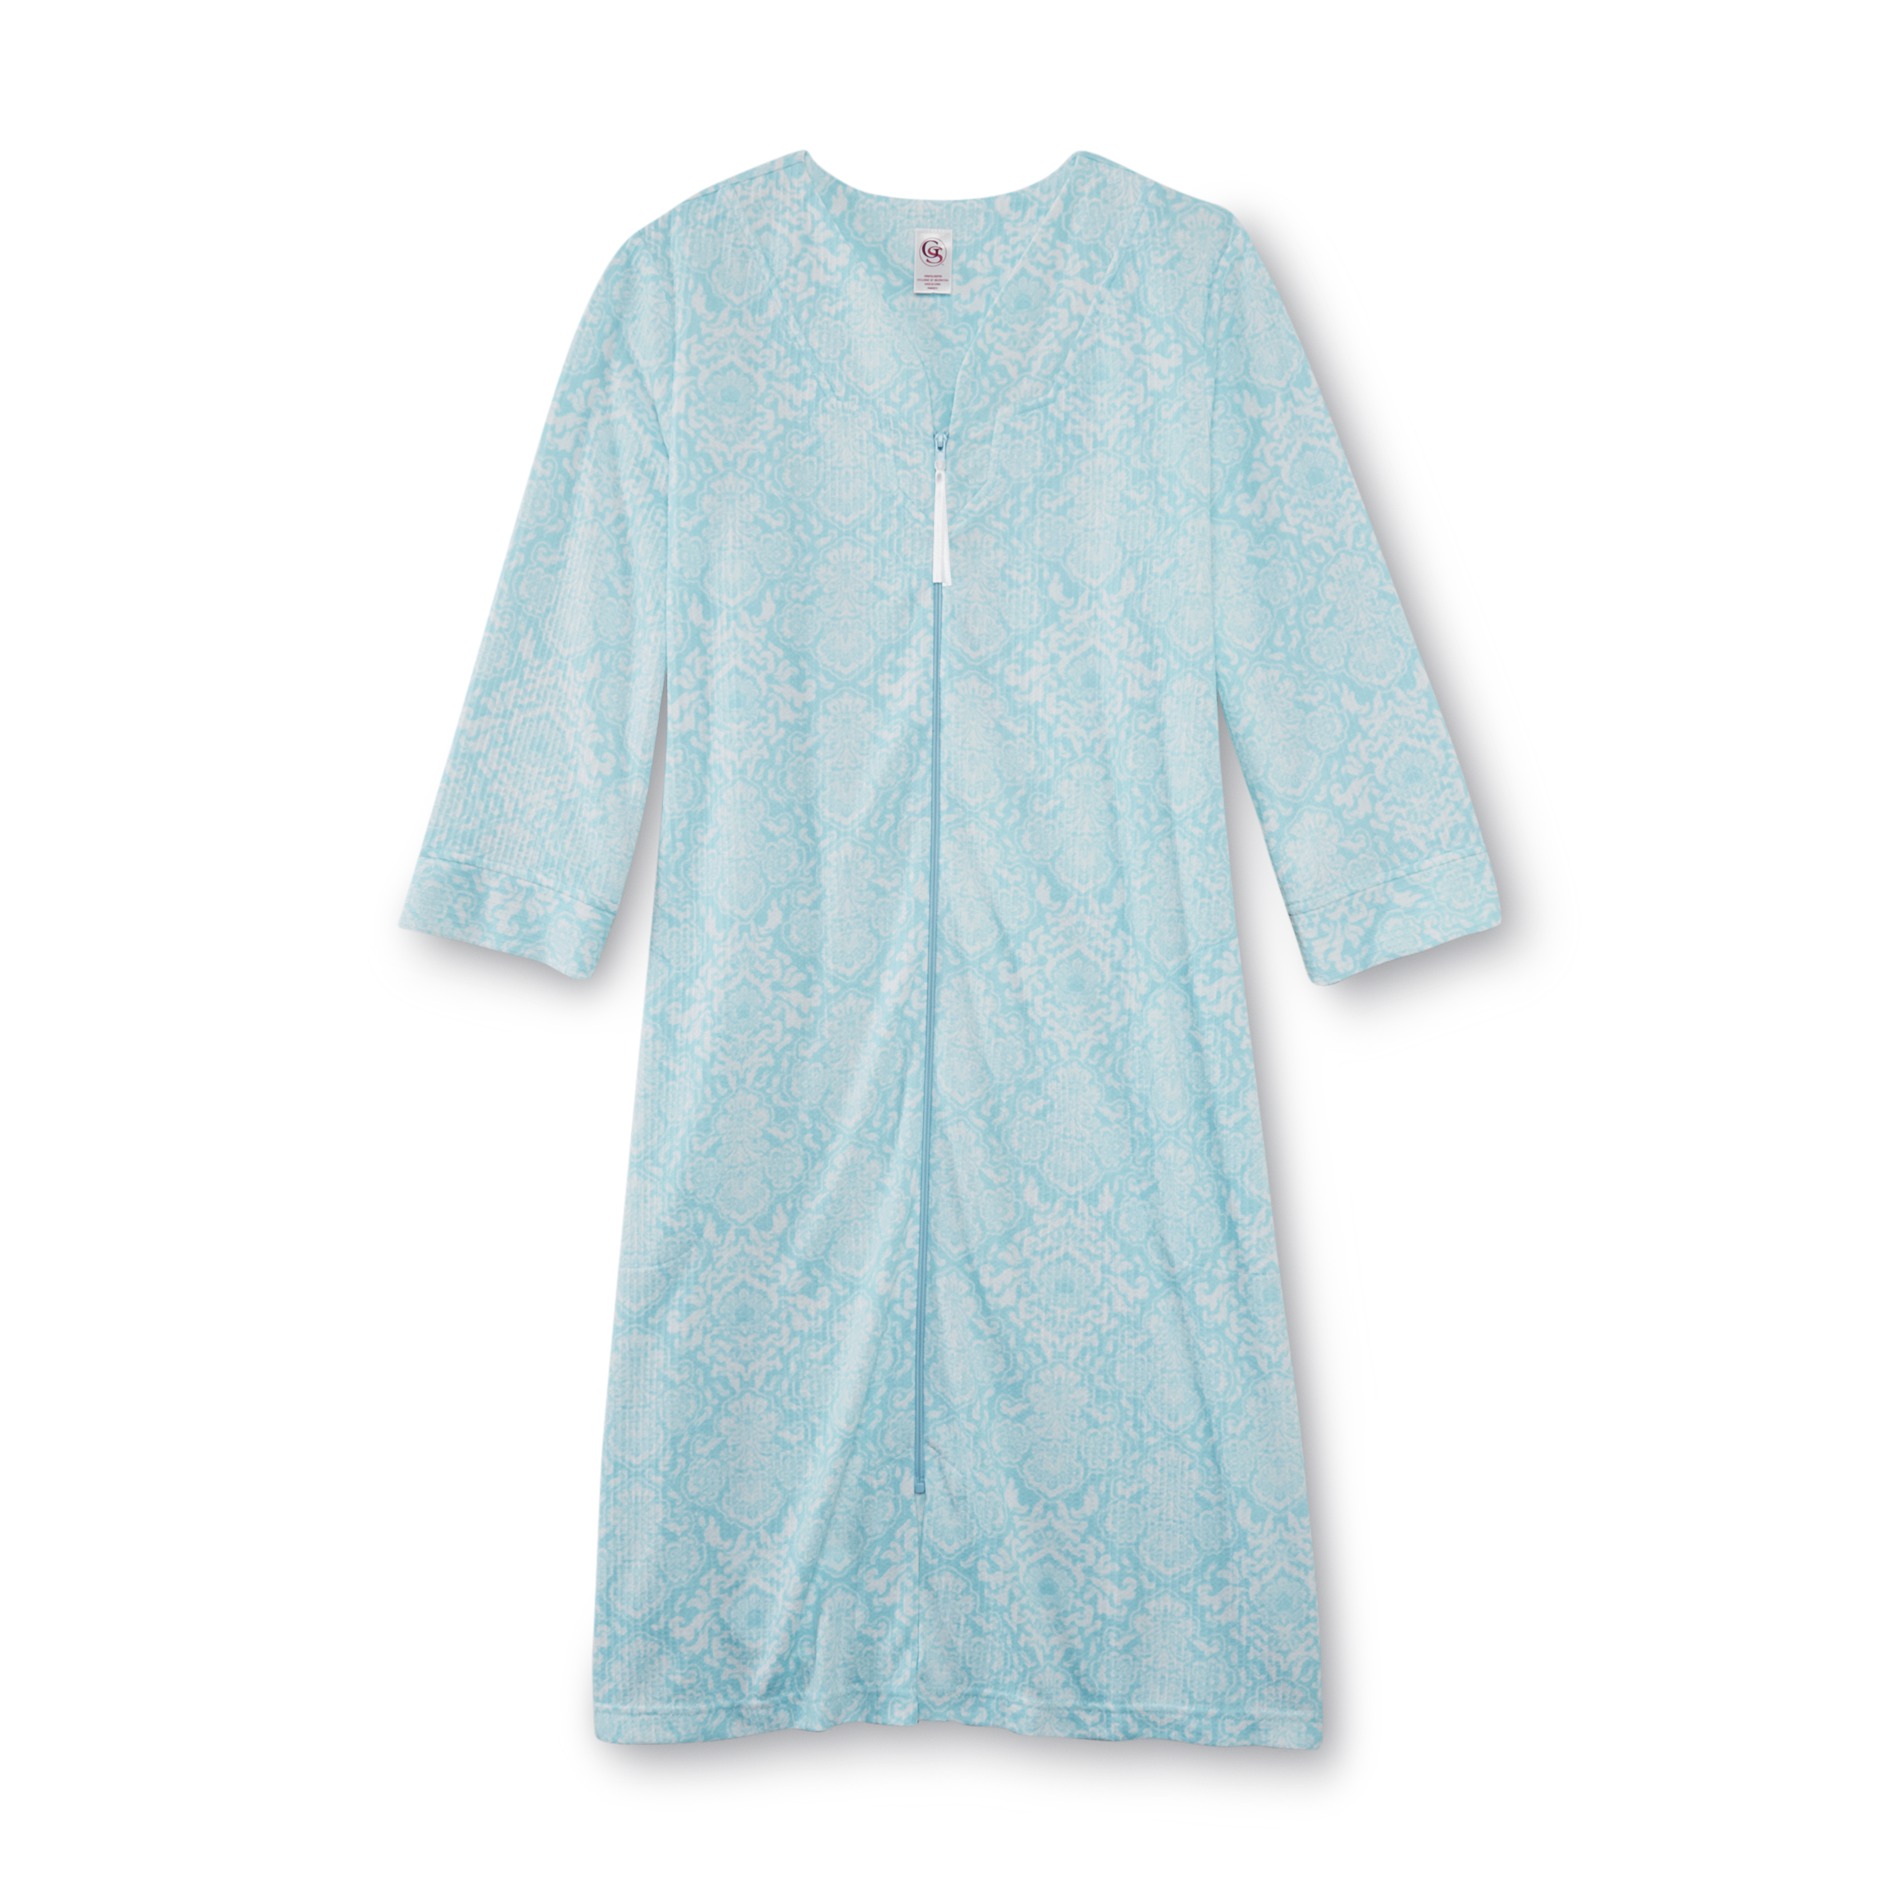 Granada Women's Plus Knit Duster Robe - Medallion Print